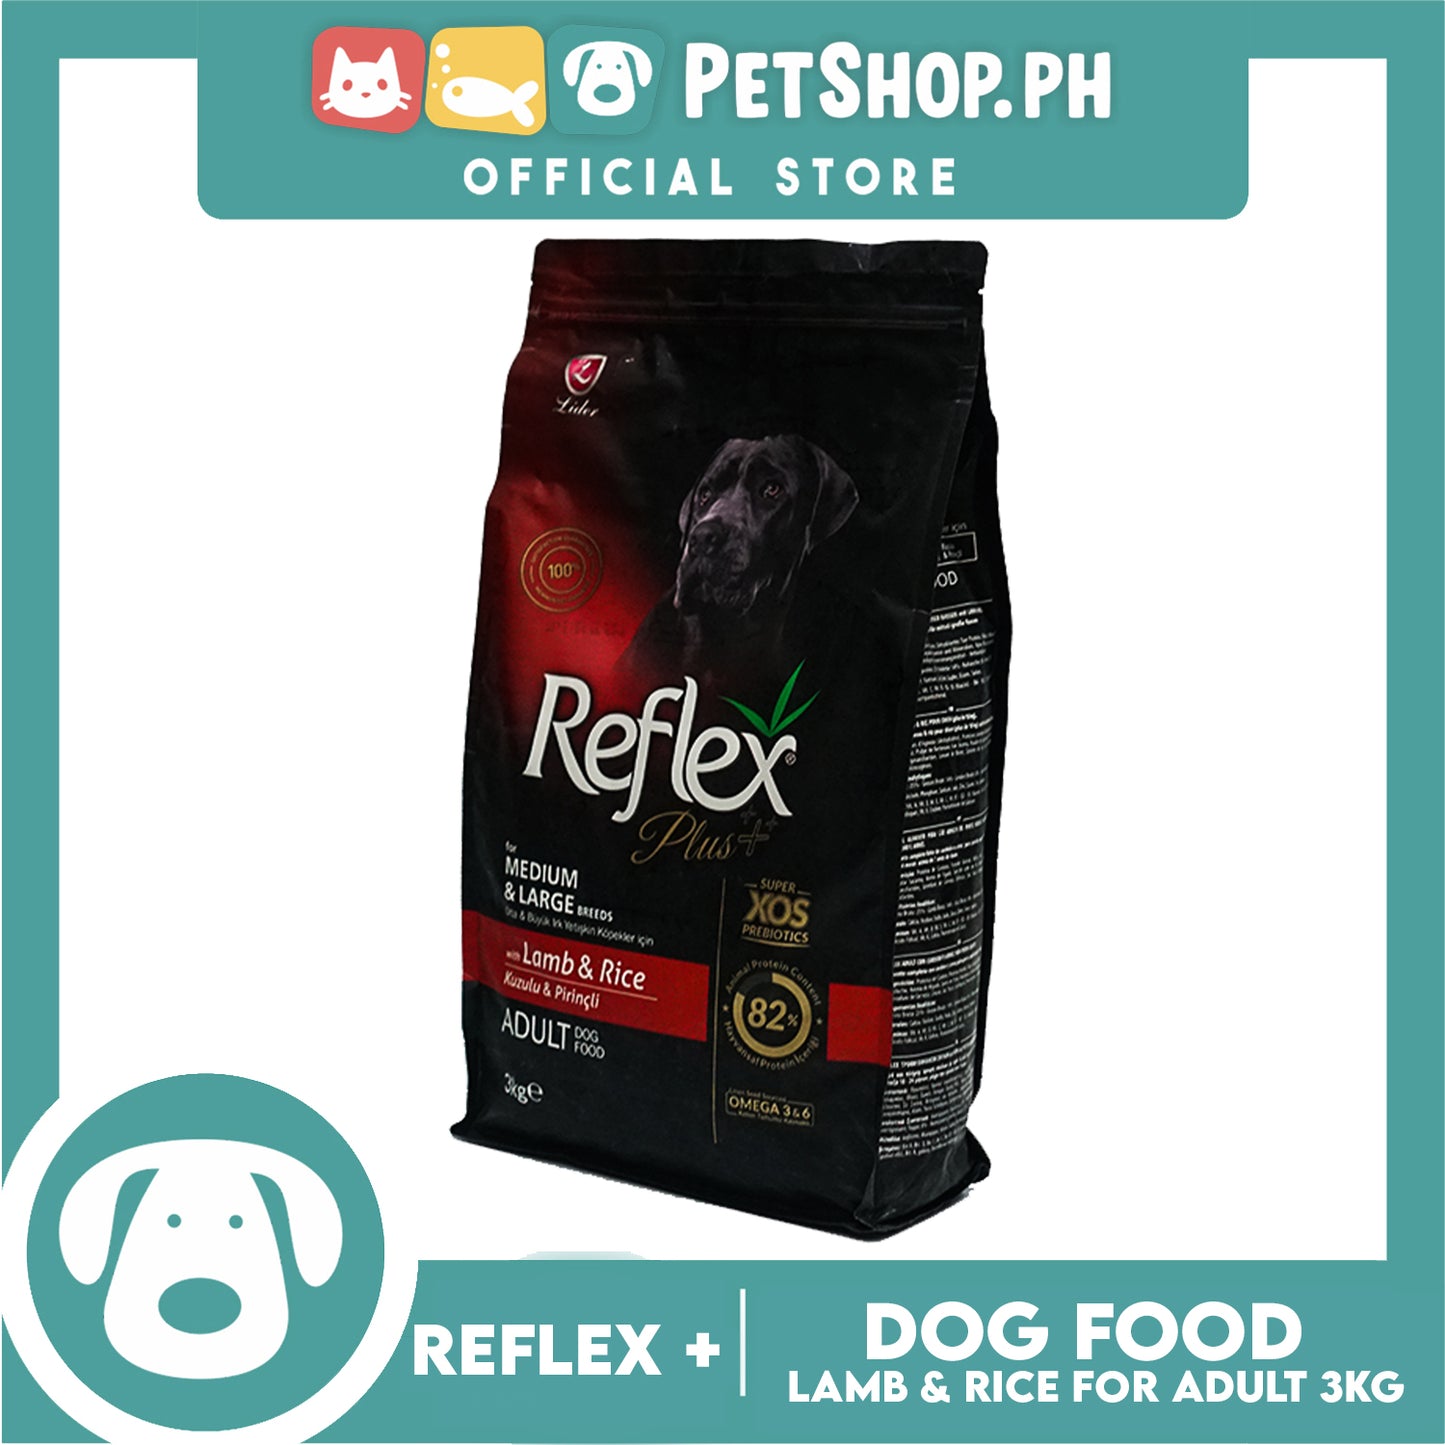 Reflex Plus Adult Dog Food for Medium & Large Breeds with Lamb & Rice 3kg